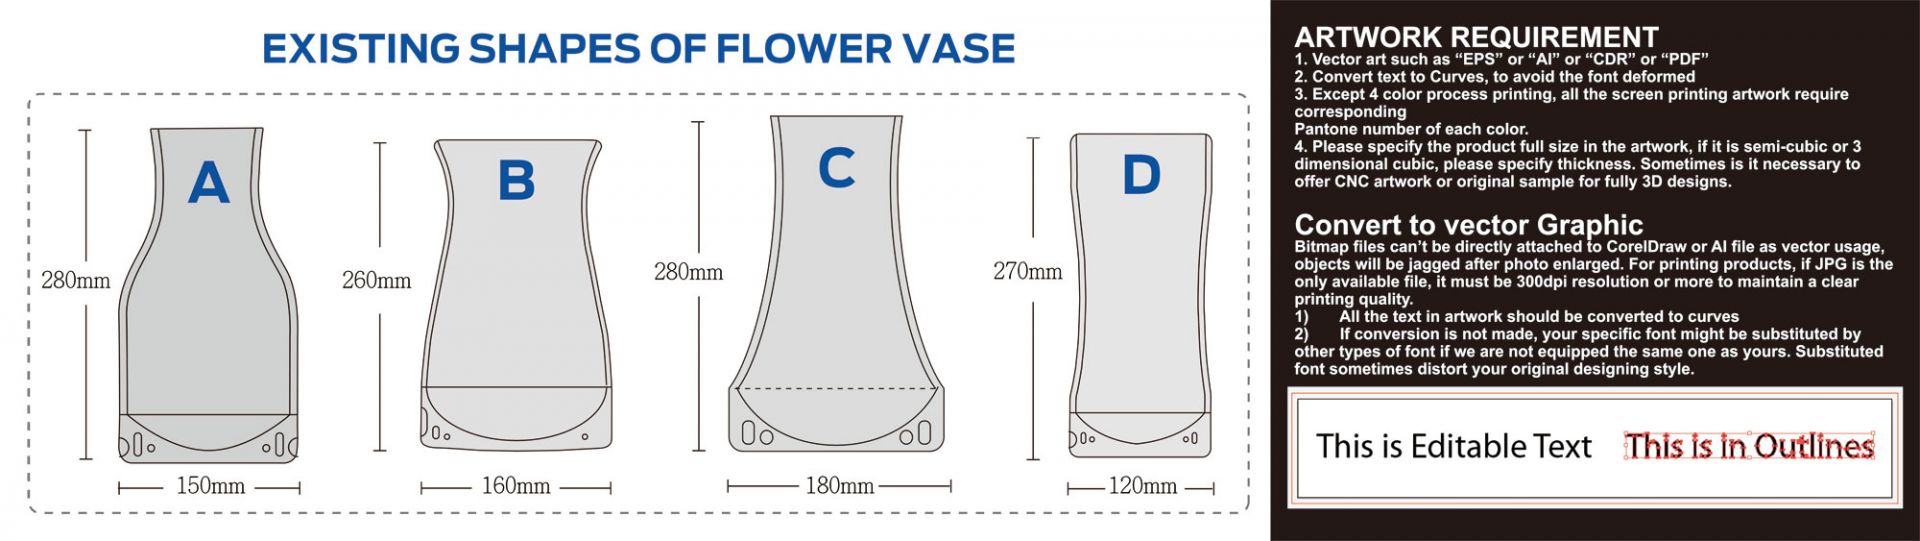 existing shapes of plastic flower vase